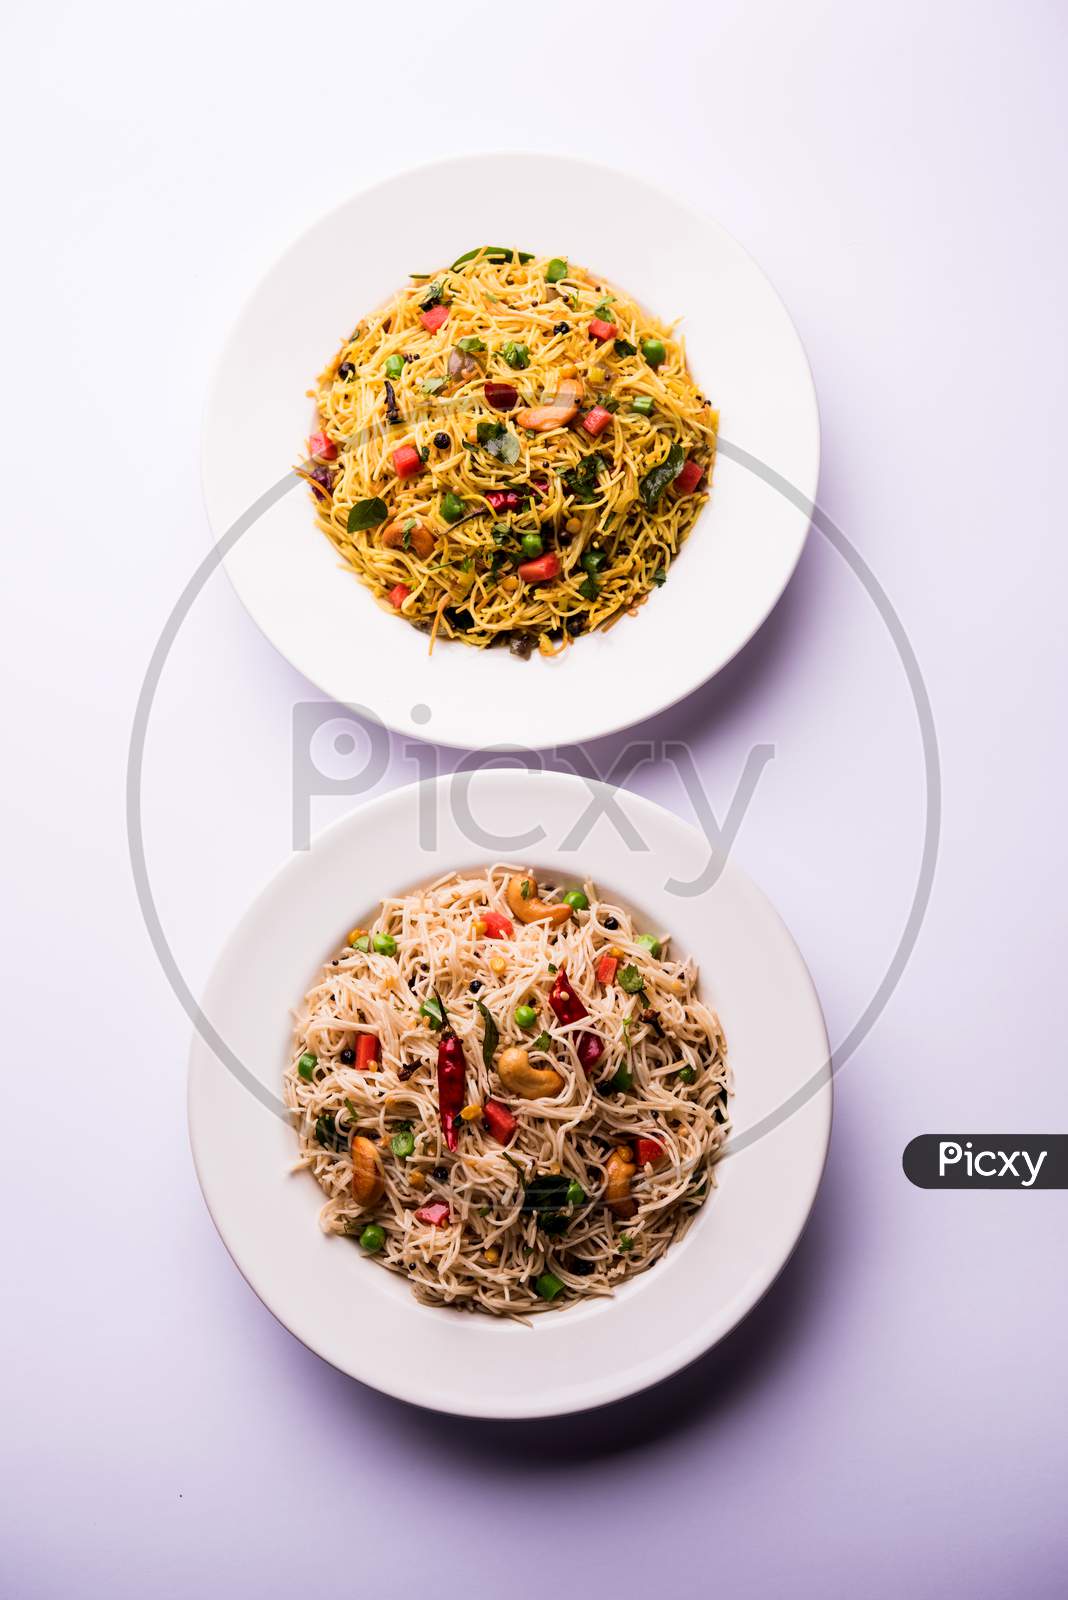 Spicy semiya uppma or upma served in plate. selective focus